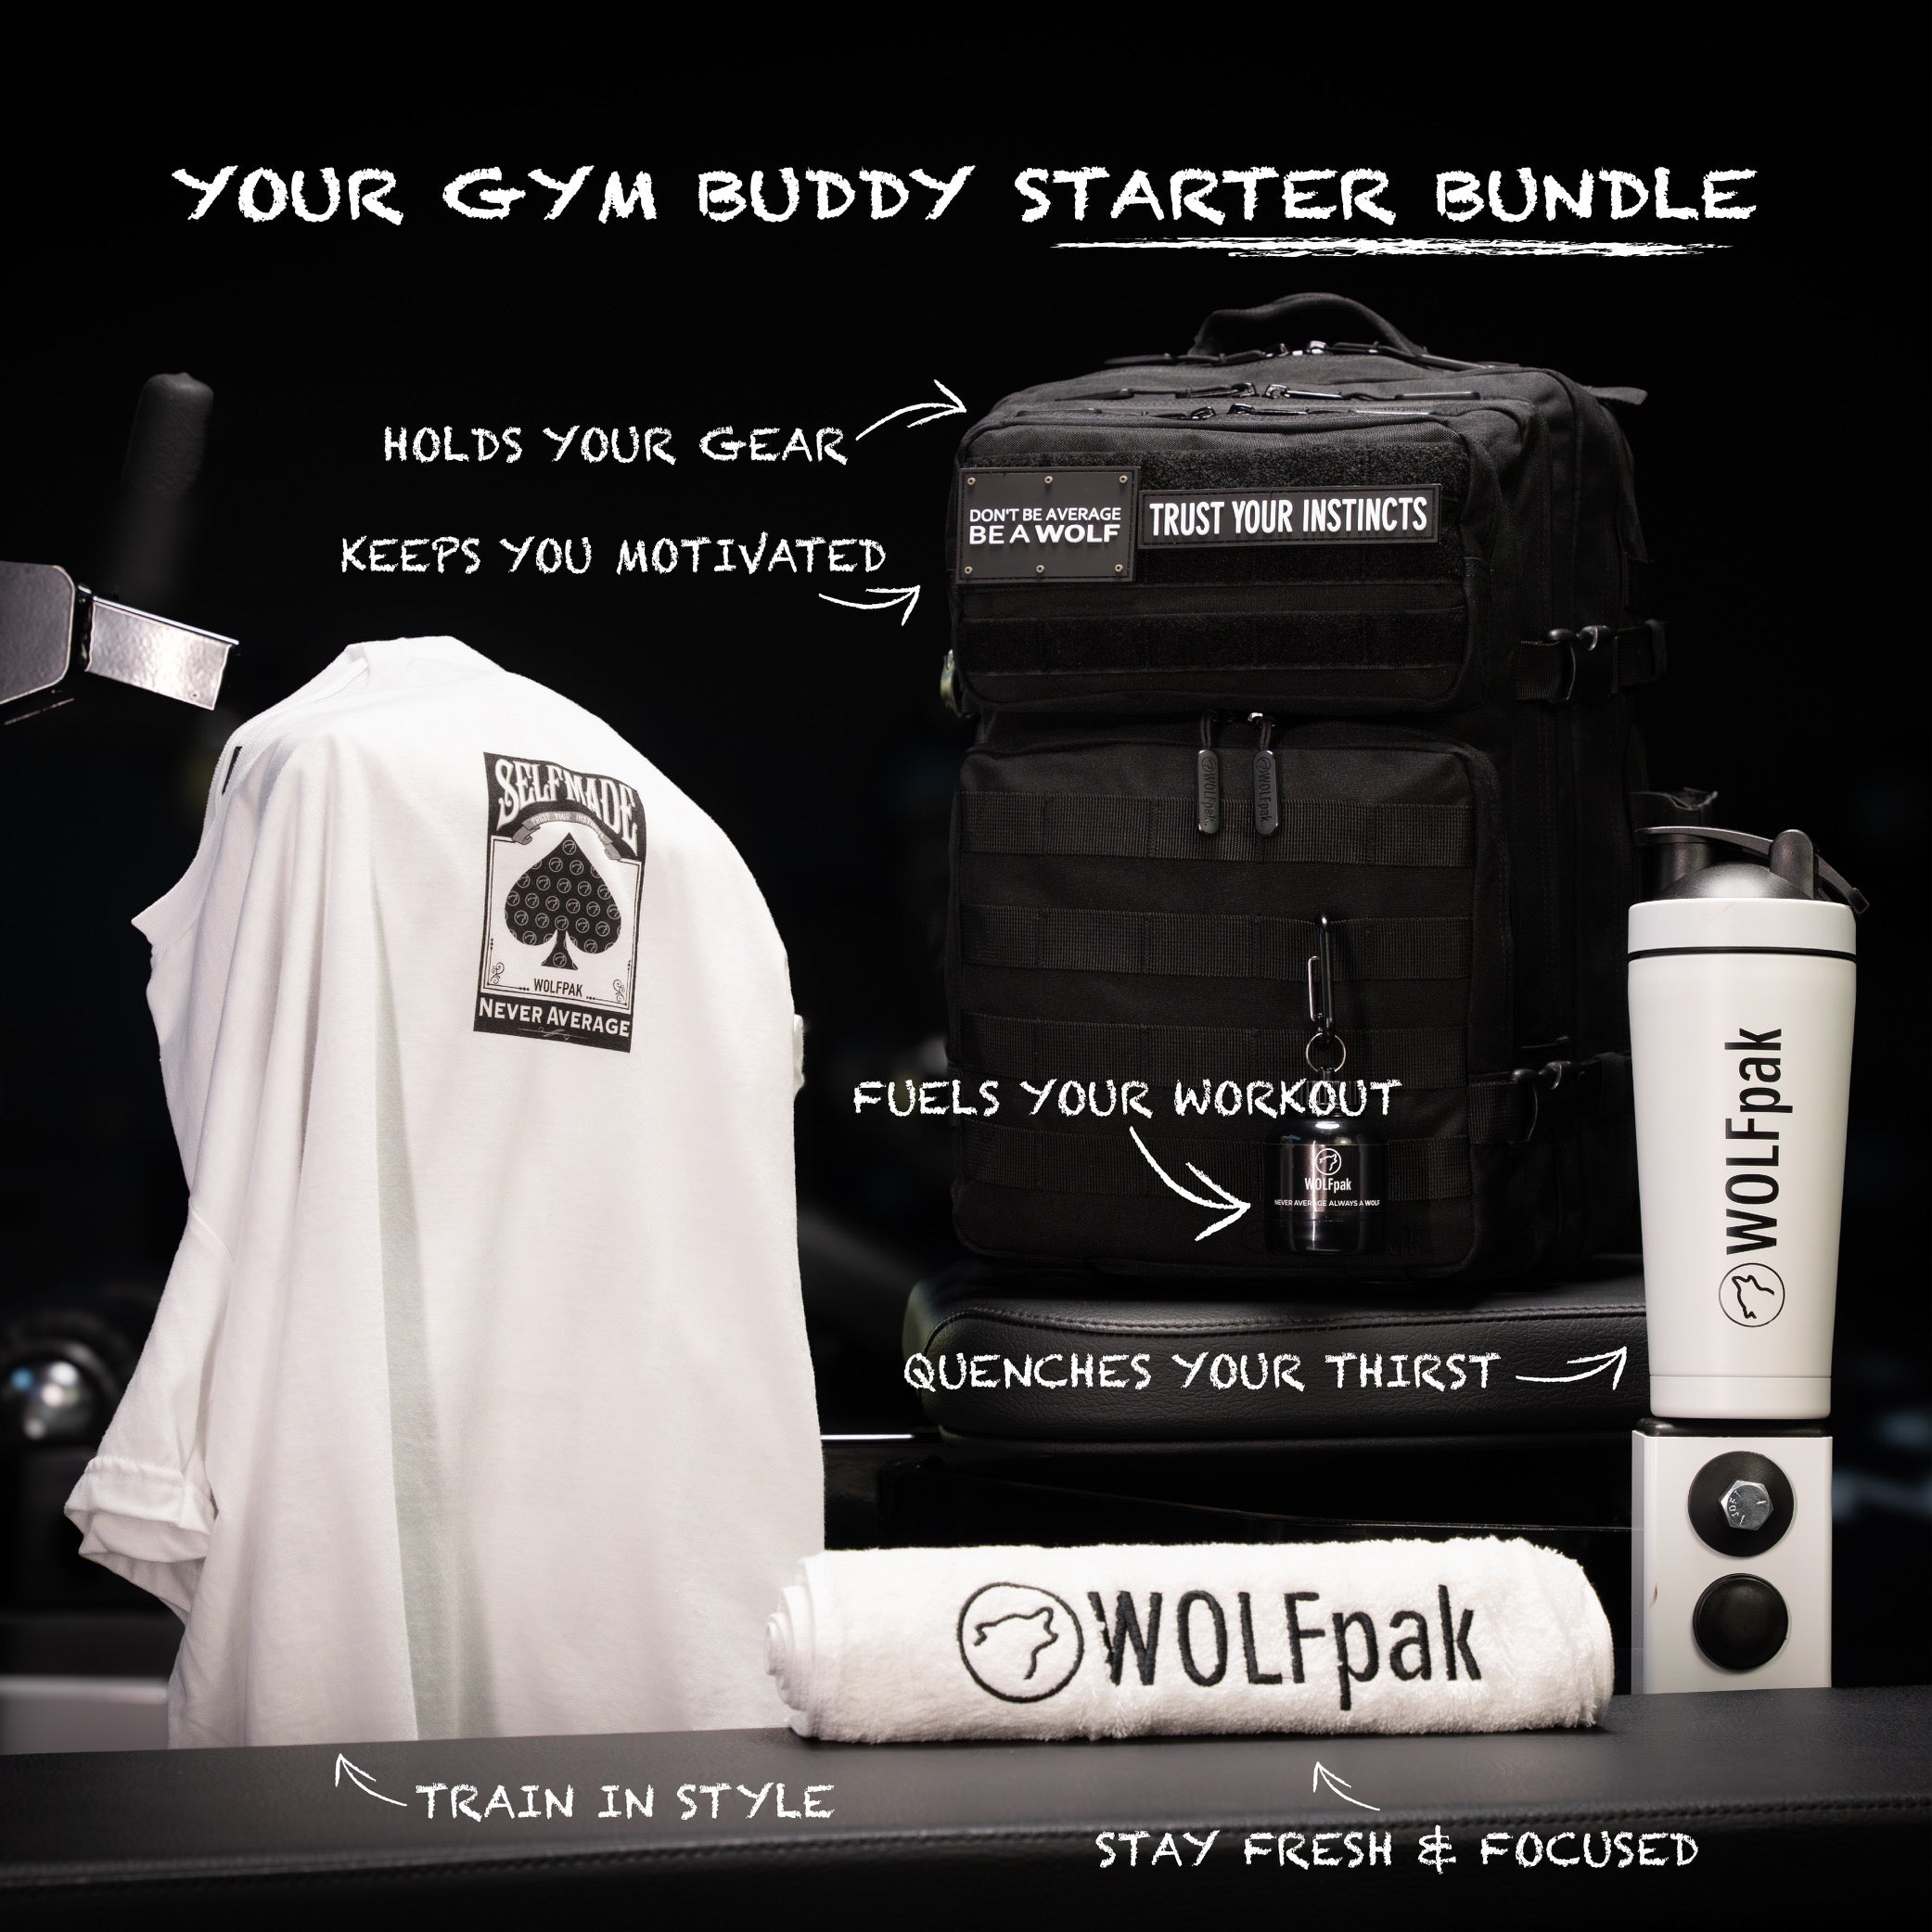 Your Gym Buddy Bundle Starter Kit